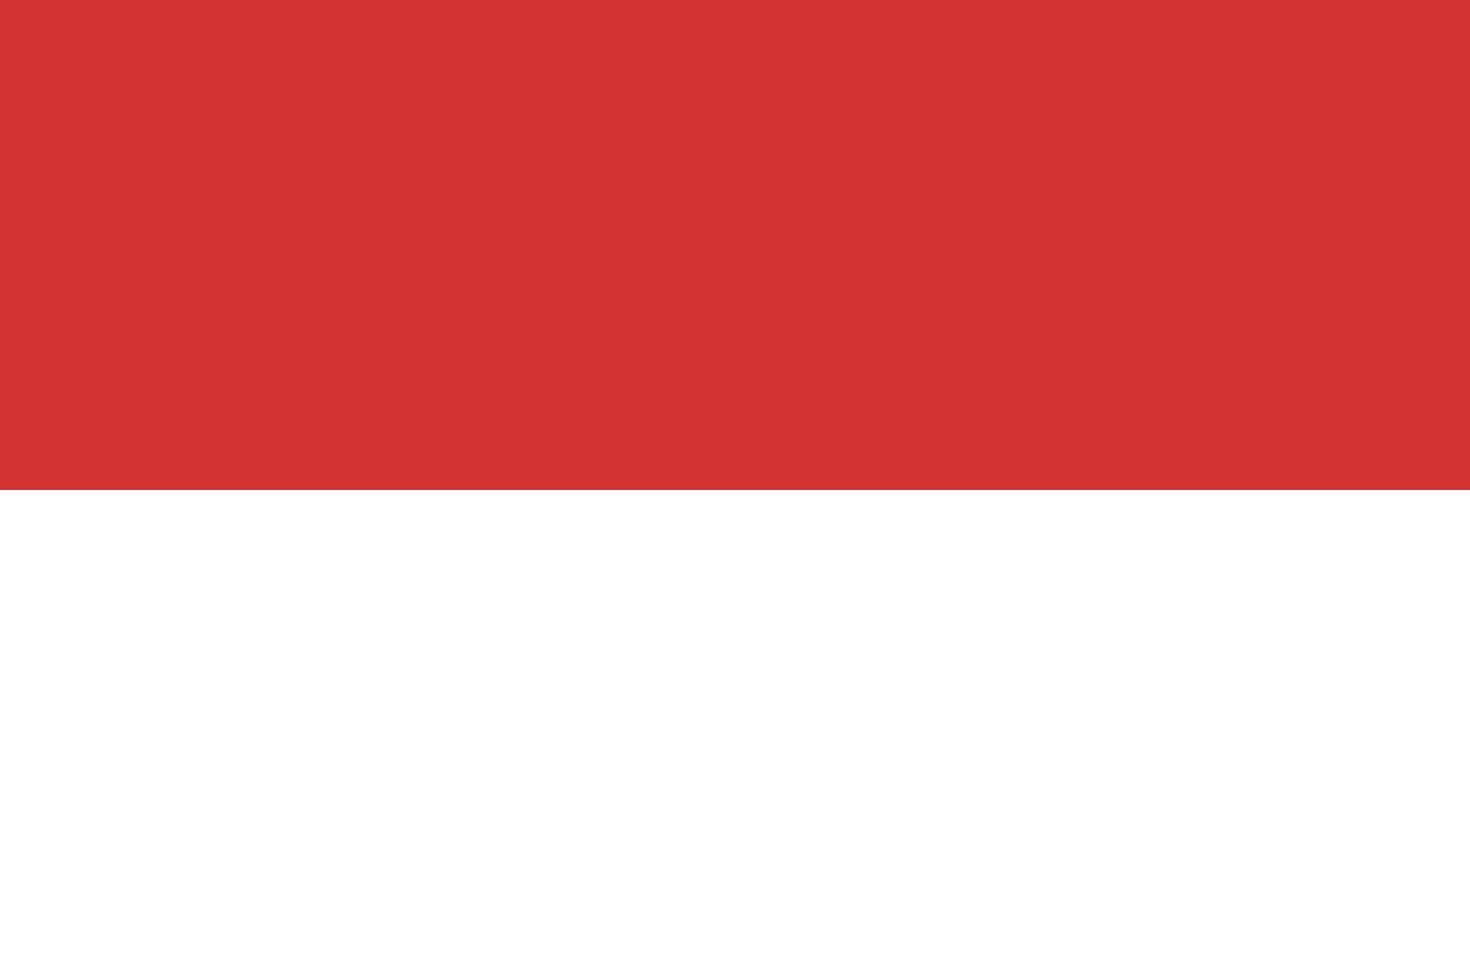 Mónaco bandera nacional emblema gráfico elemento ilustración vector